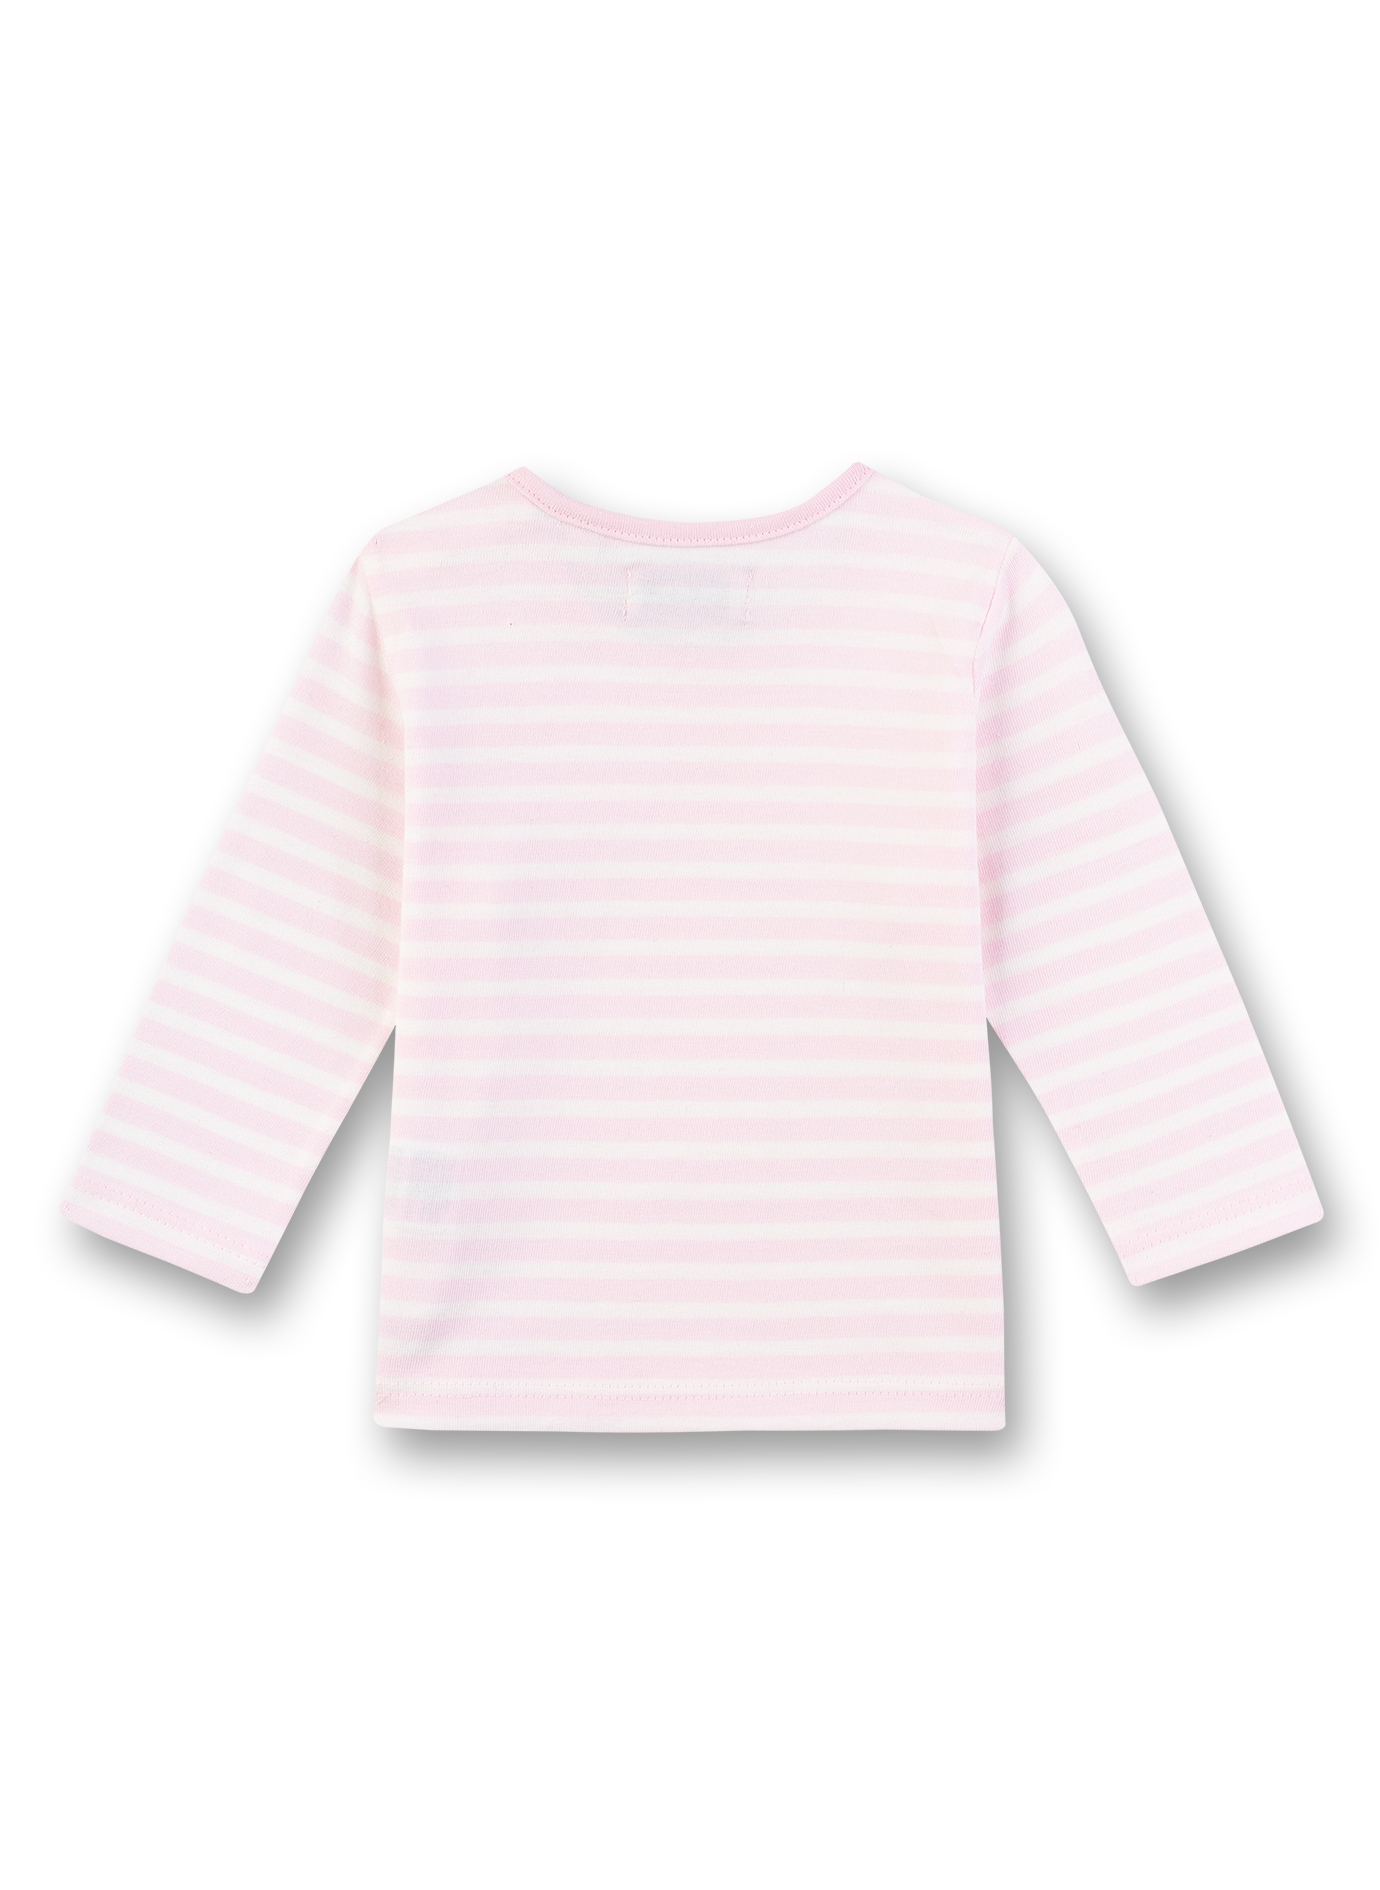 Mädchen-Shirt langarm Rosa-geringelt